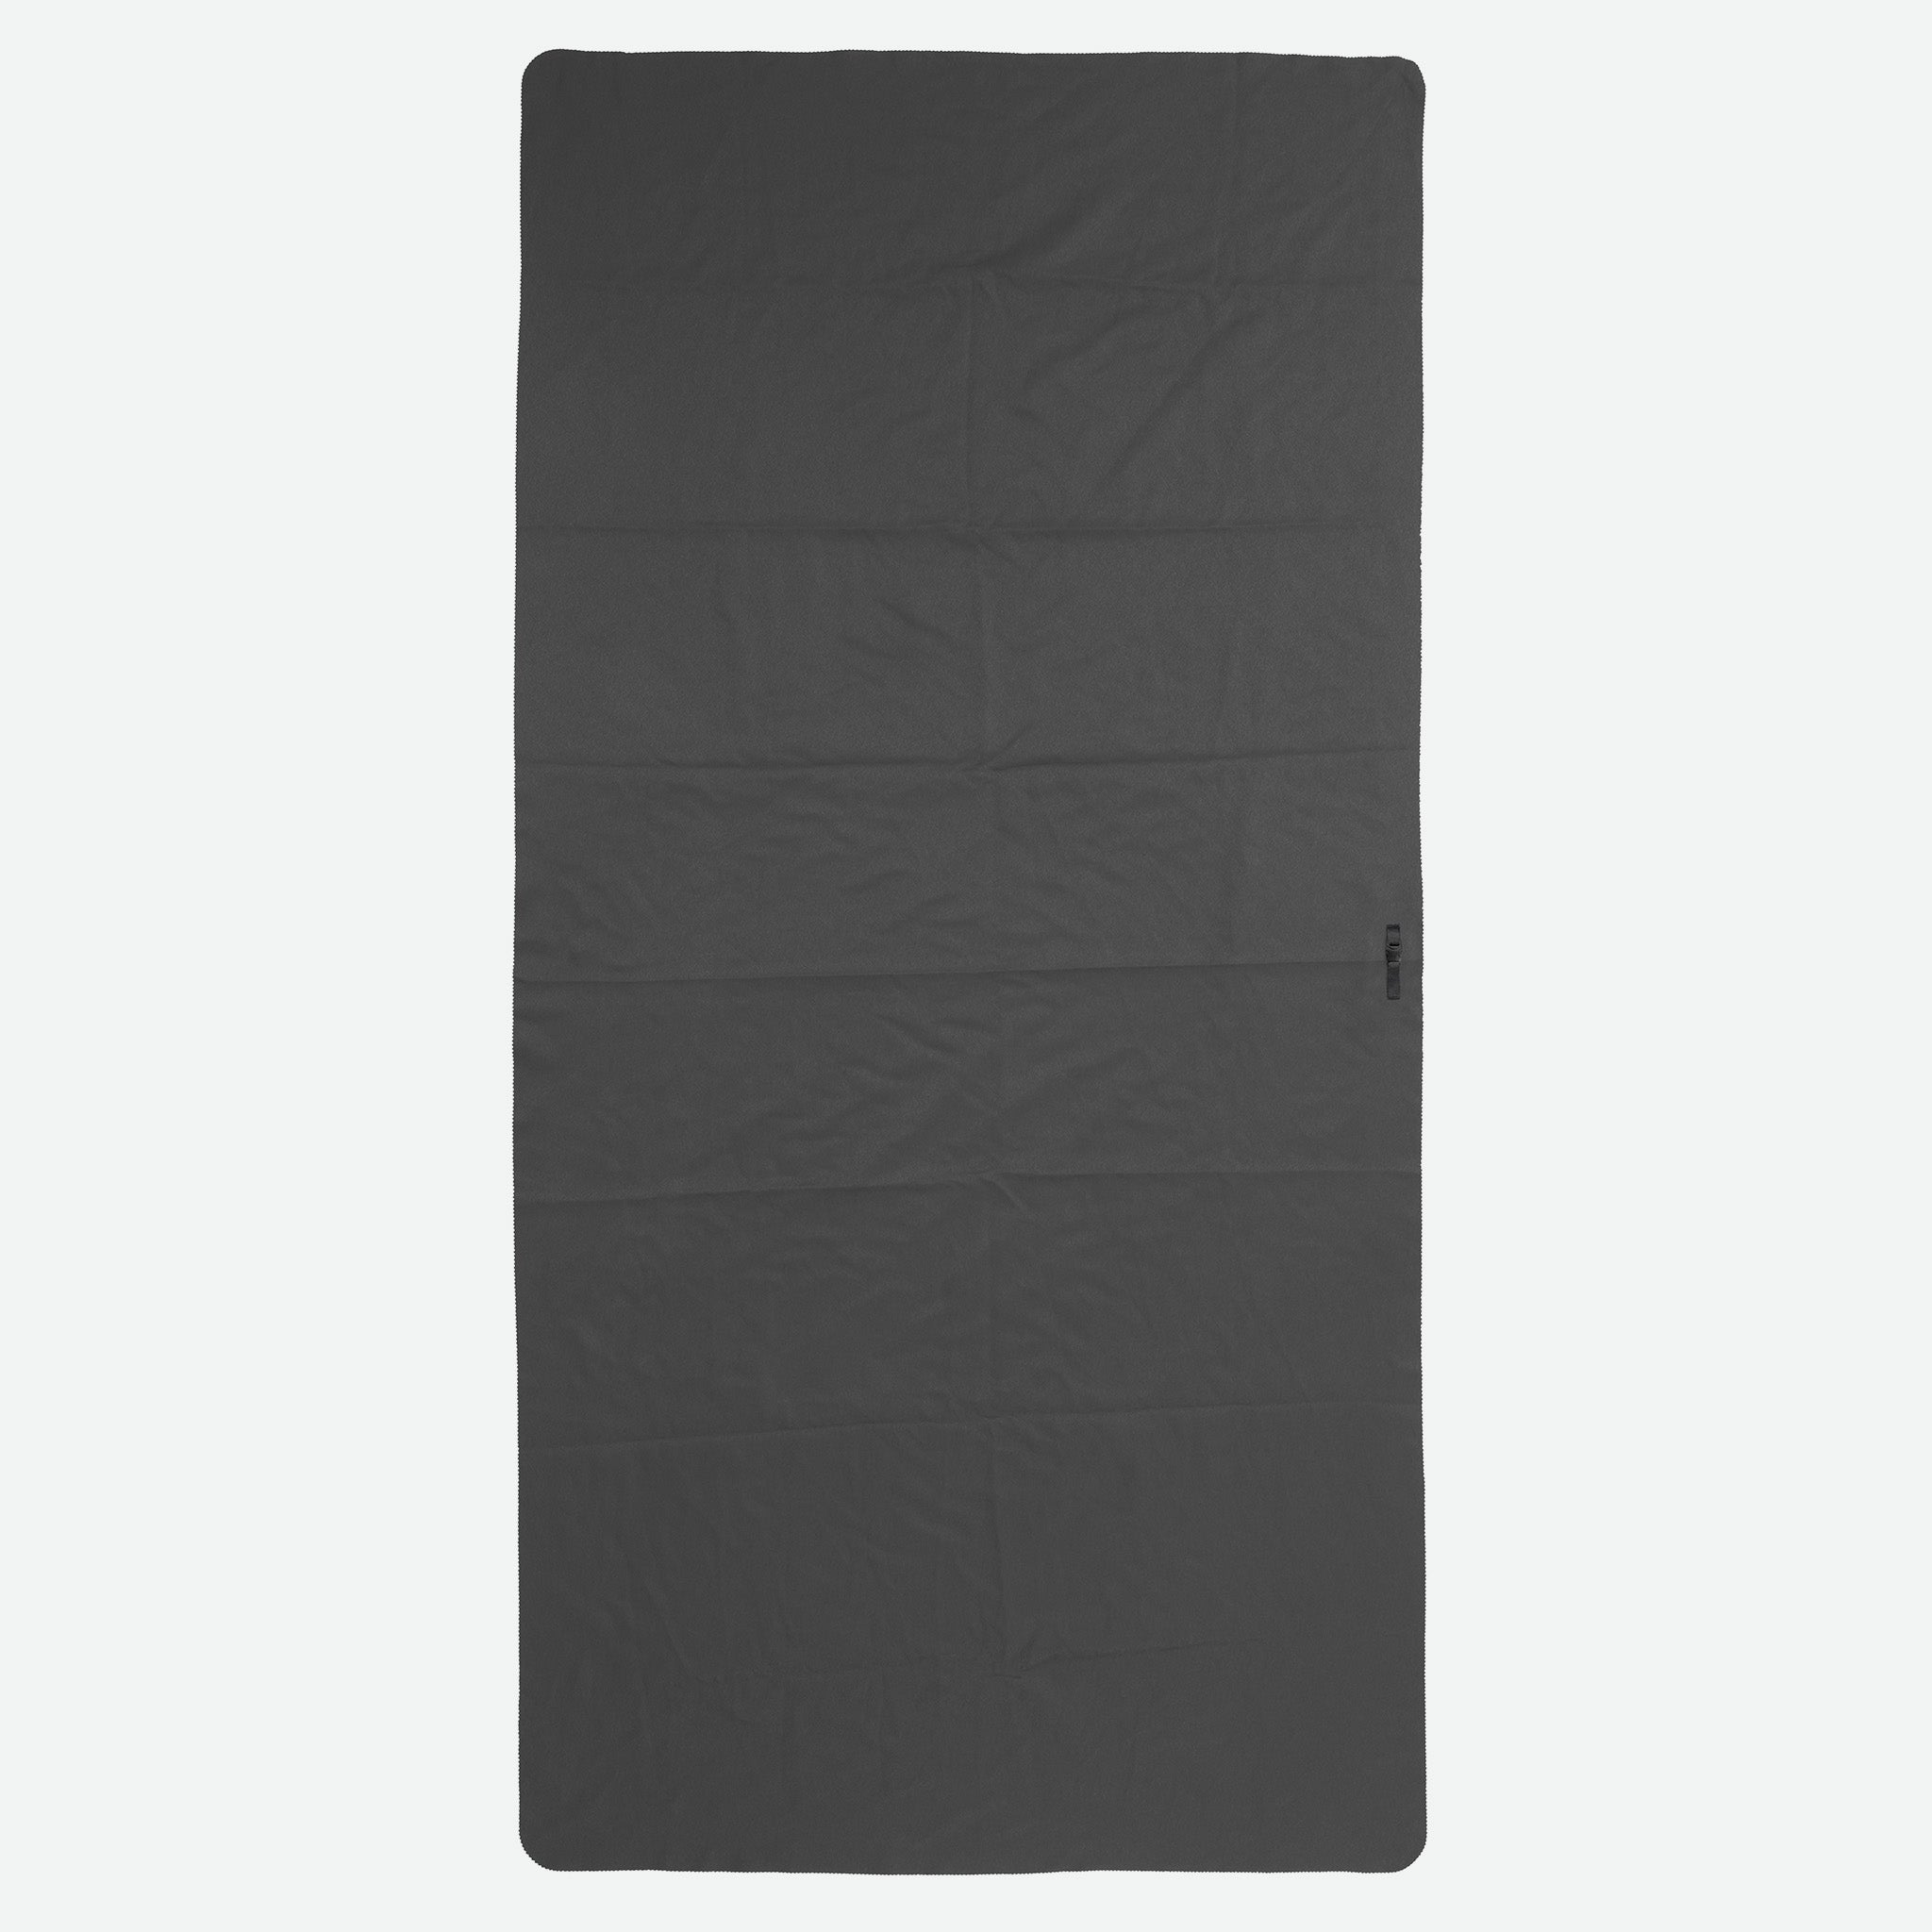 Matador Ultralight Travel Towel (Large)